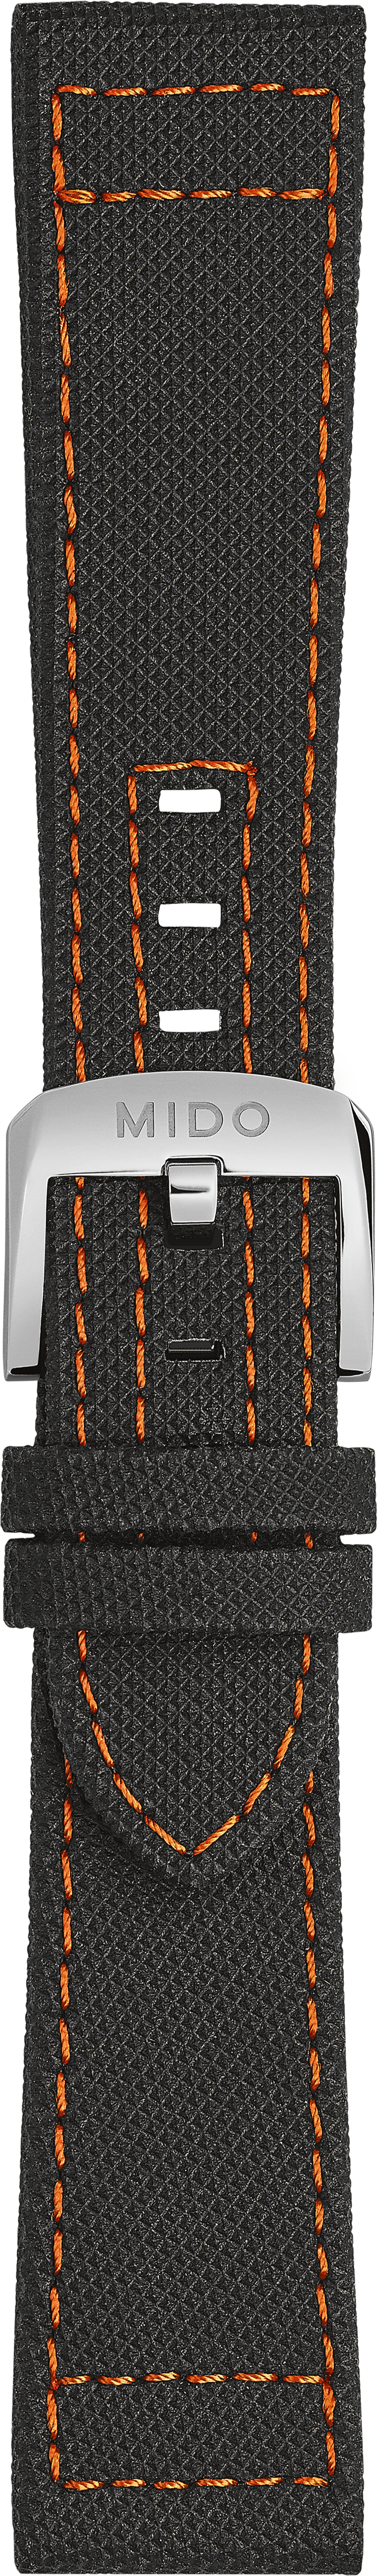 Mido Ocean Star black cowhide leather strap